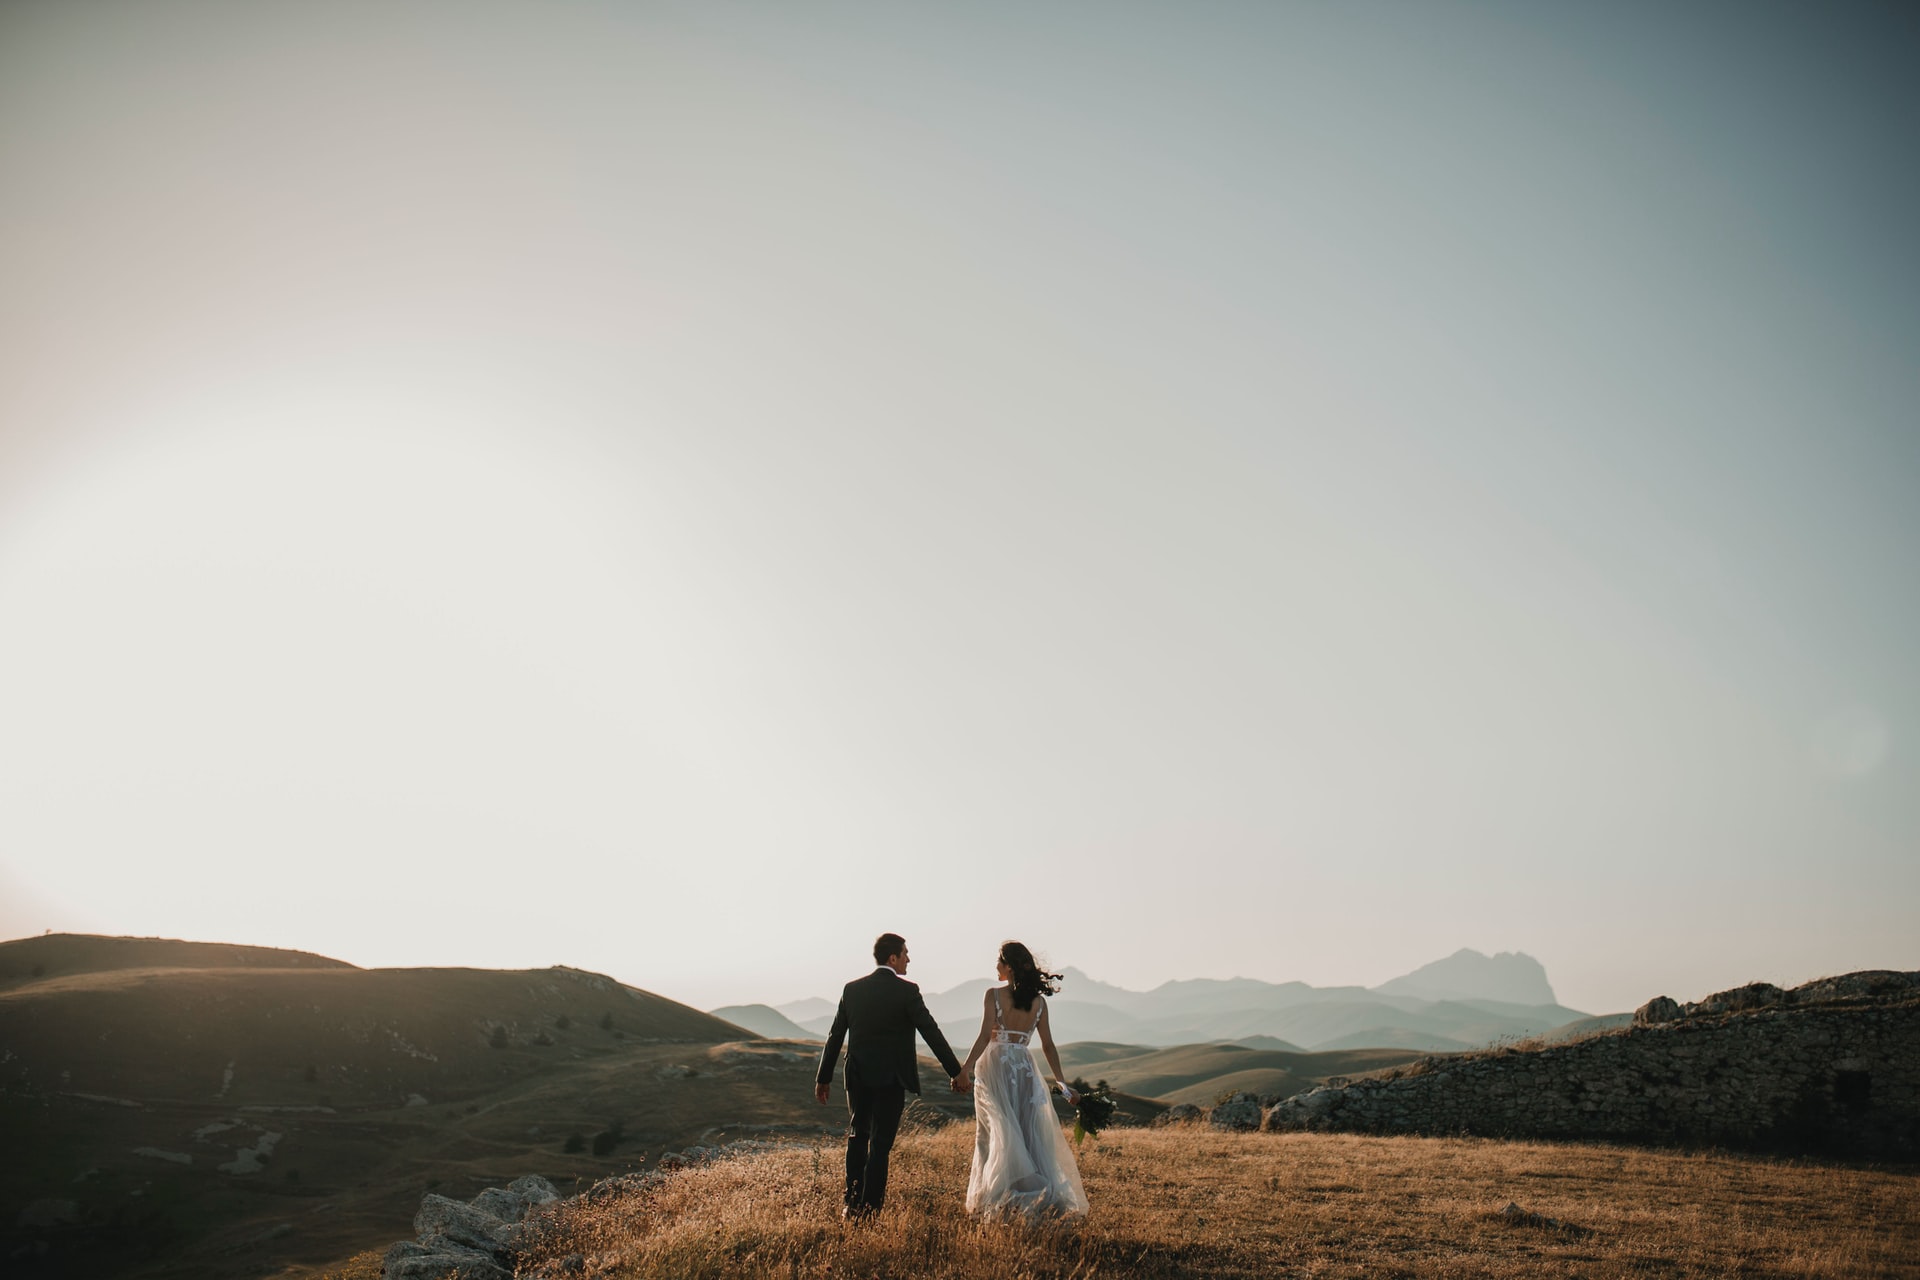 सजातीय अंतरजातीय विवाह – एक मॉडर्न विचार